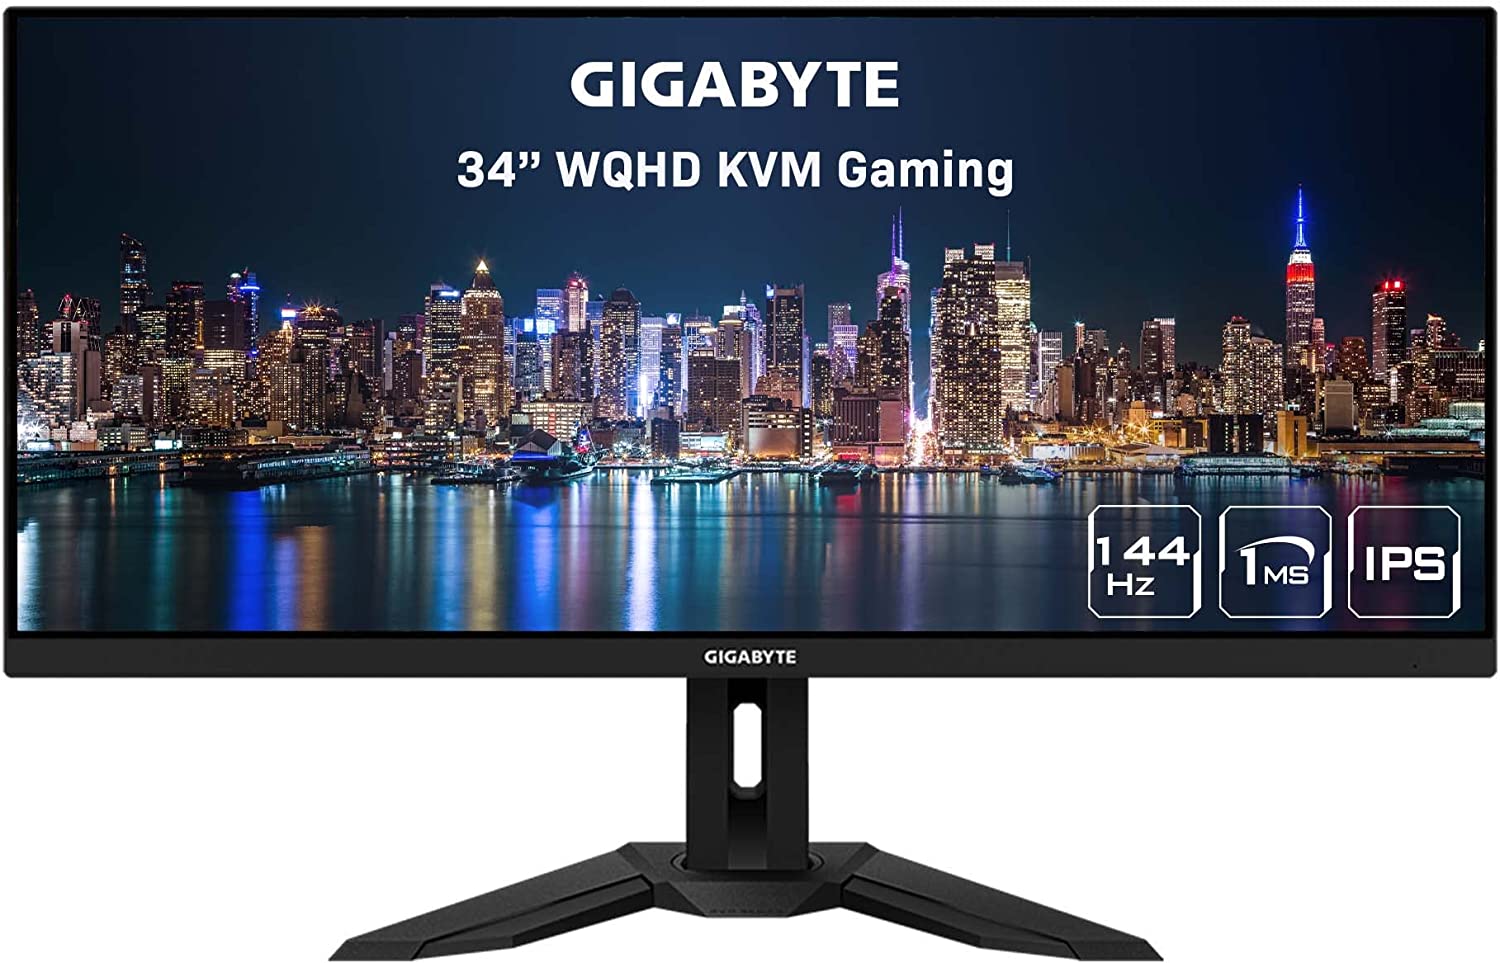 GIGABYTE M34WQ 34" 144Hz Ultrawide KVM Gaming Monitor, 3440 x 1440 IPS Display $399.99 at Amazon